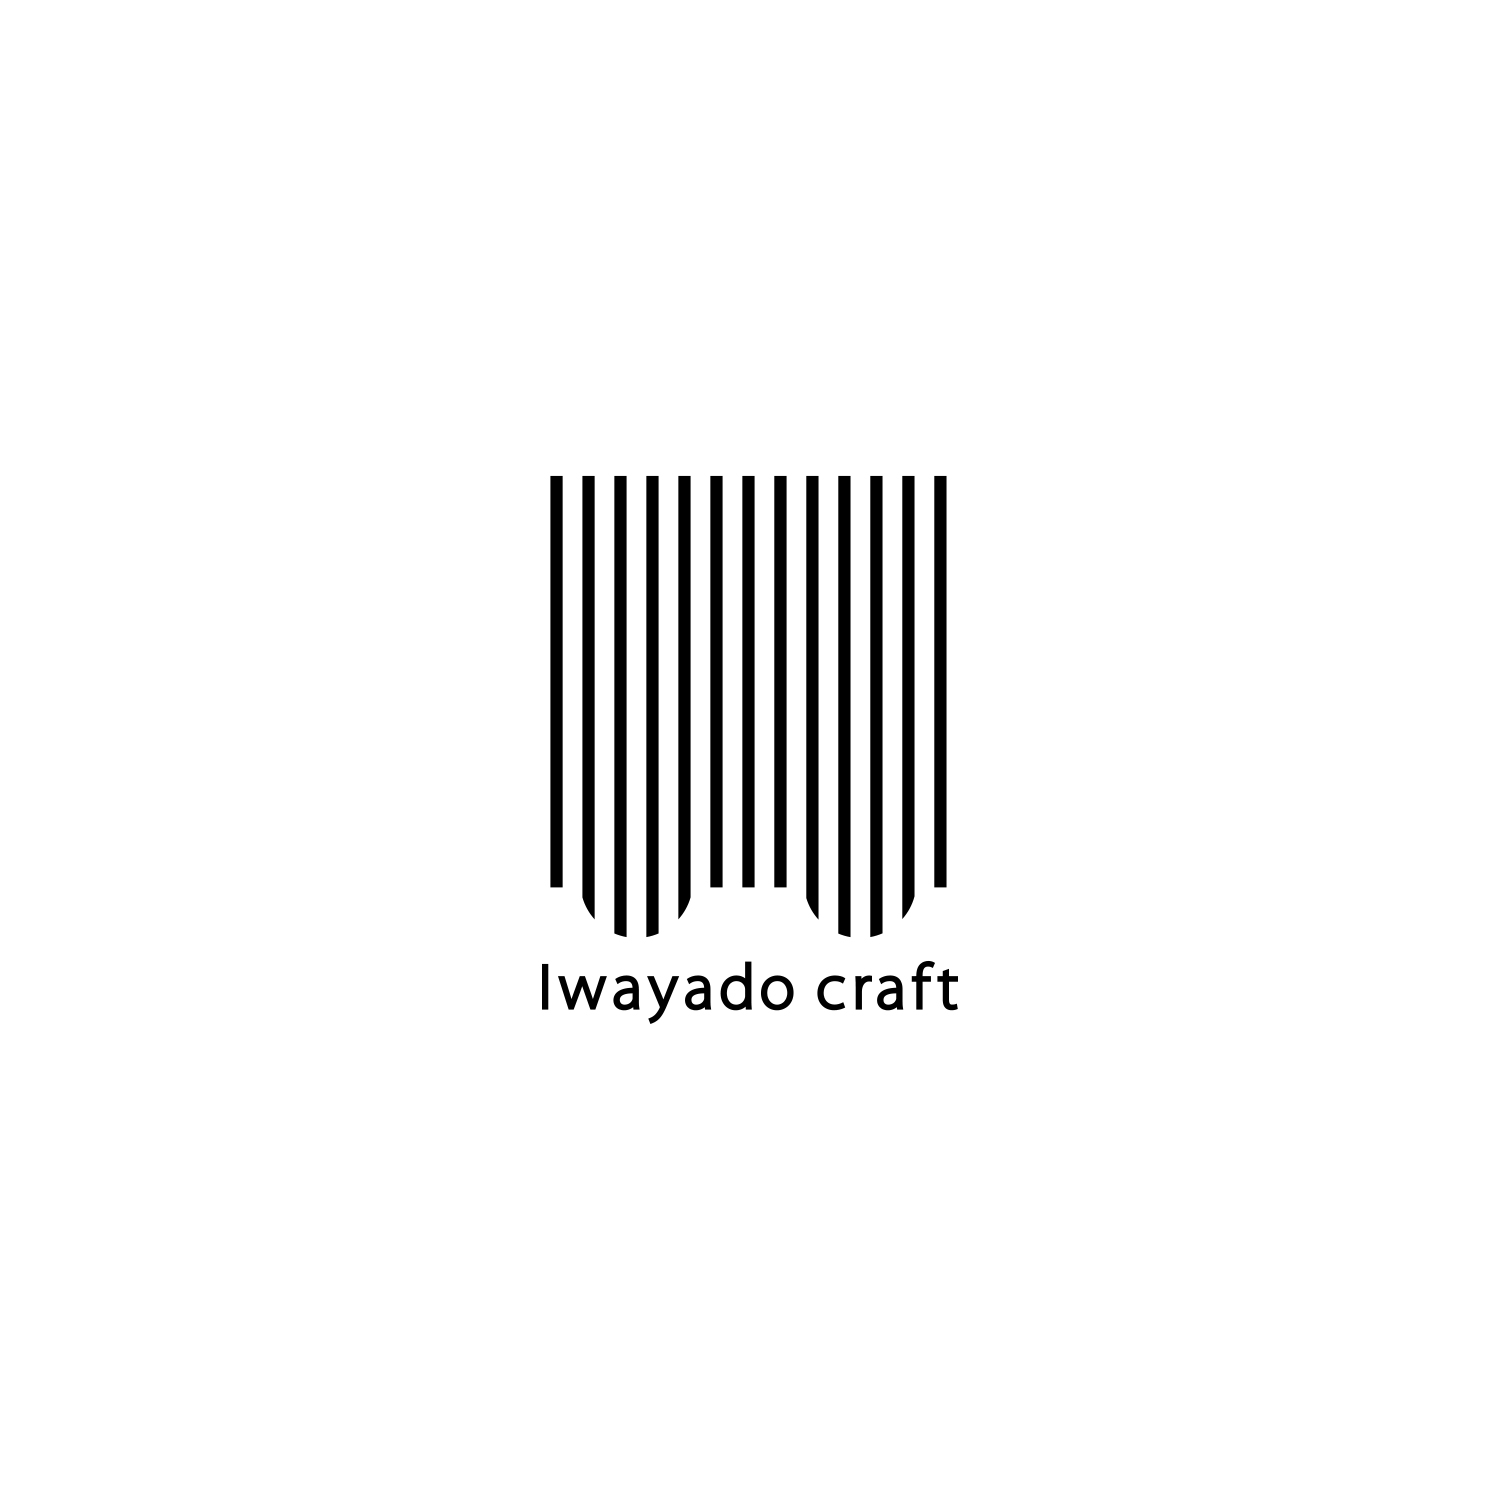 Iwayado craft